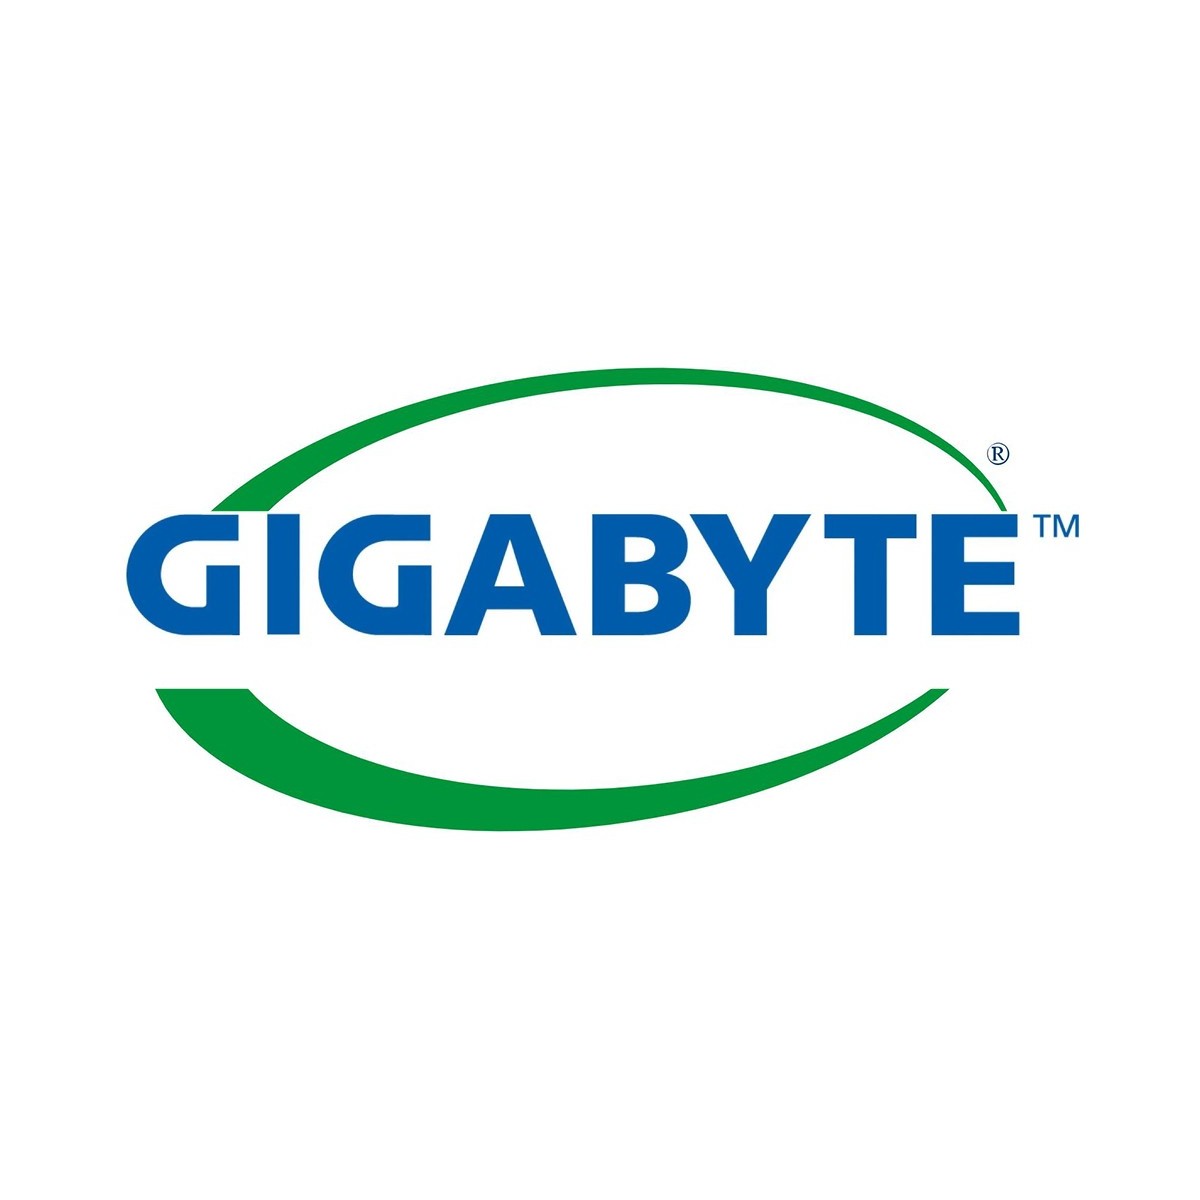 Gigabyte Netzteil 650W 80+ Platinum redundant 25EP0-206505-F3S - Power Supply - Redundancy